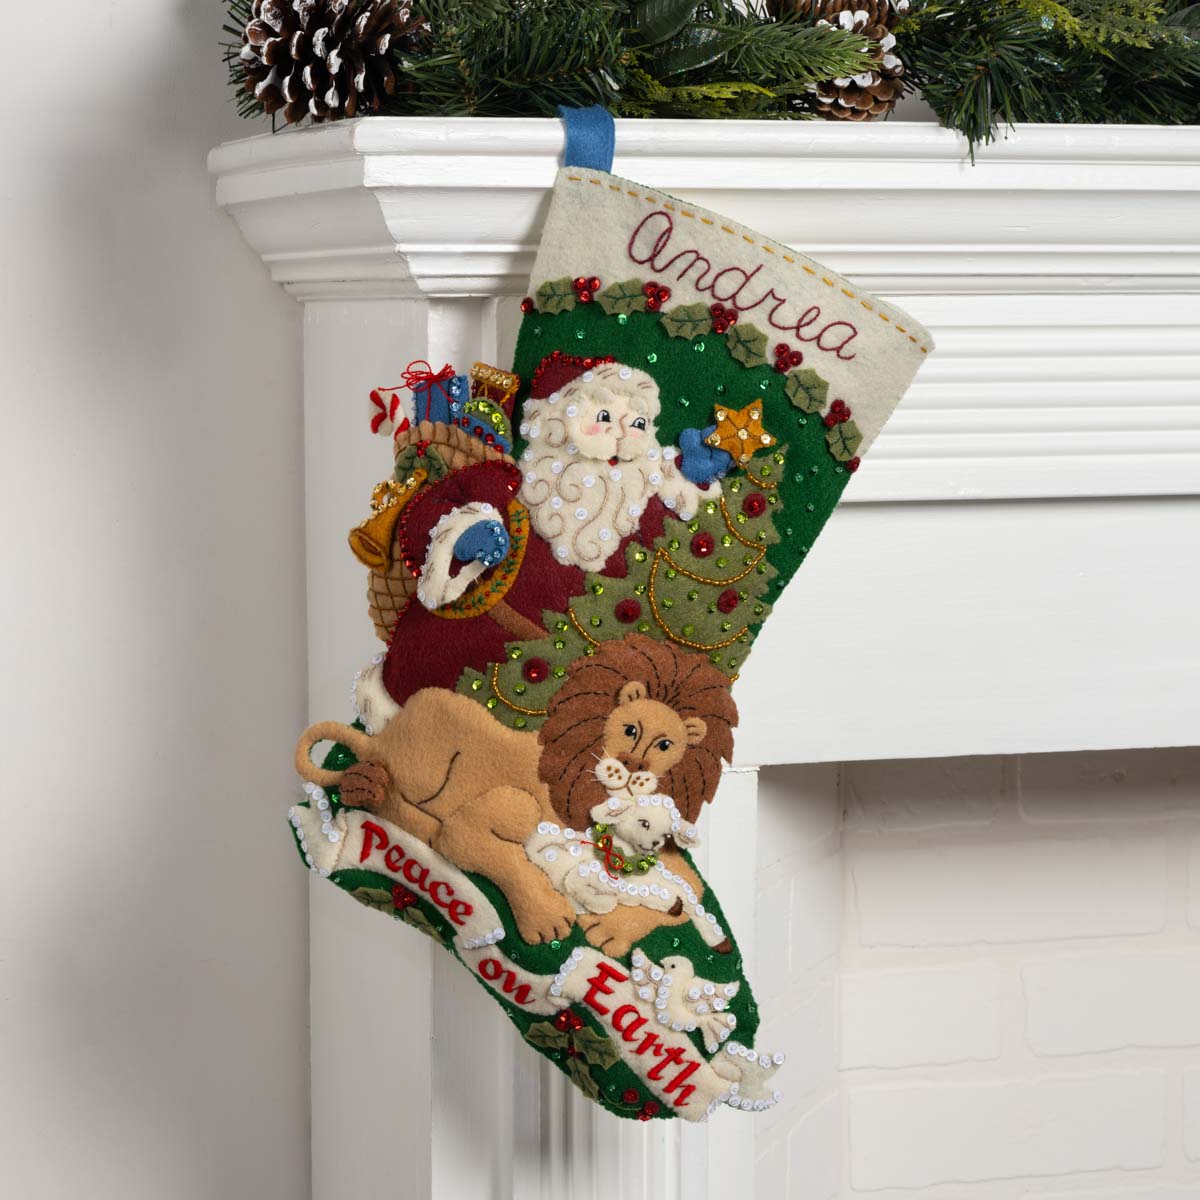 Bucilla ® Seasonal - Felt - Stocking Kits - Let There Be Peace - 89542E